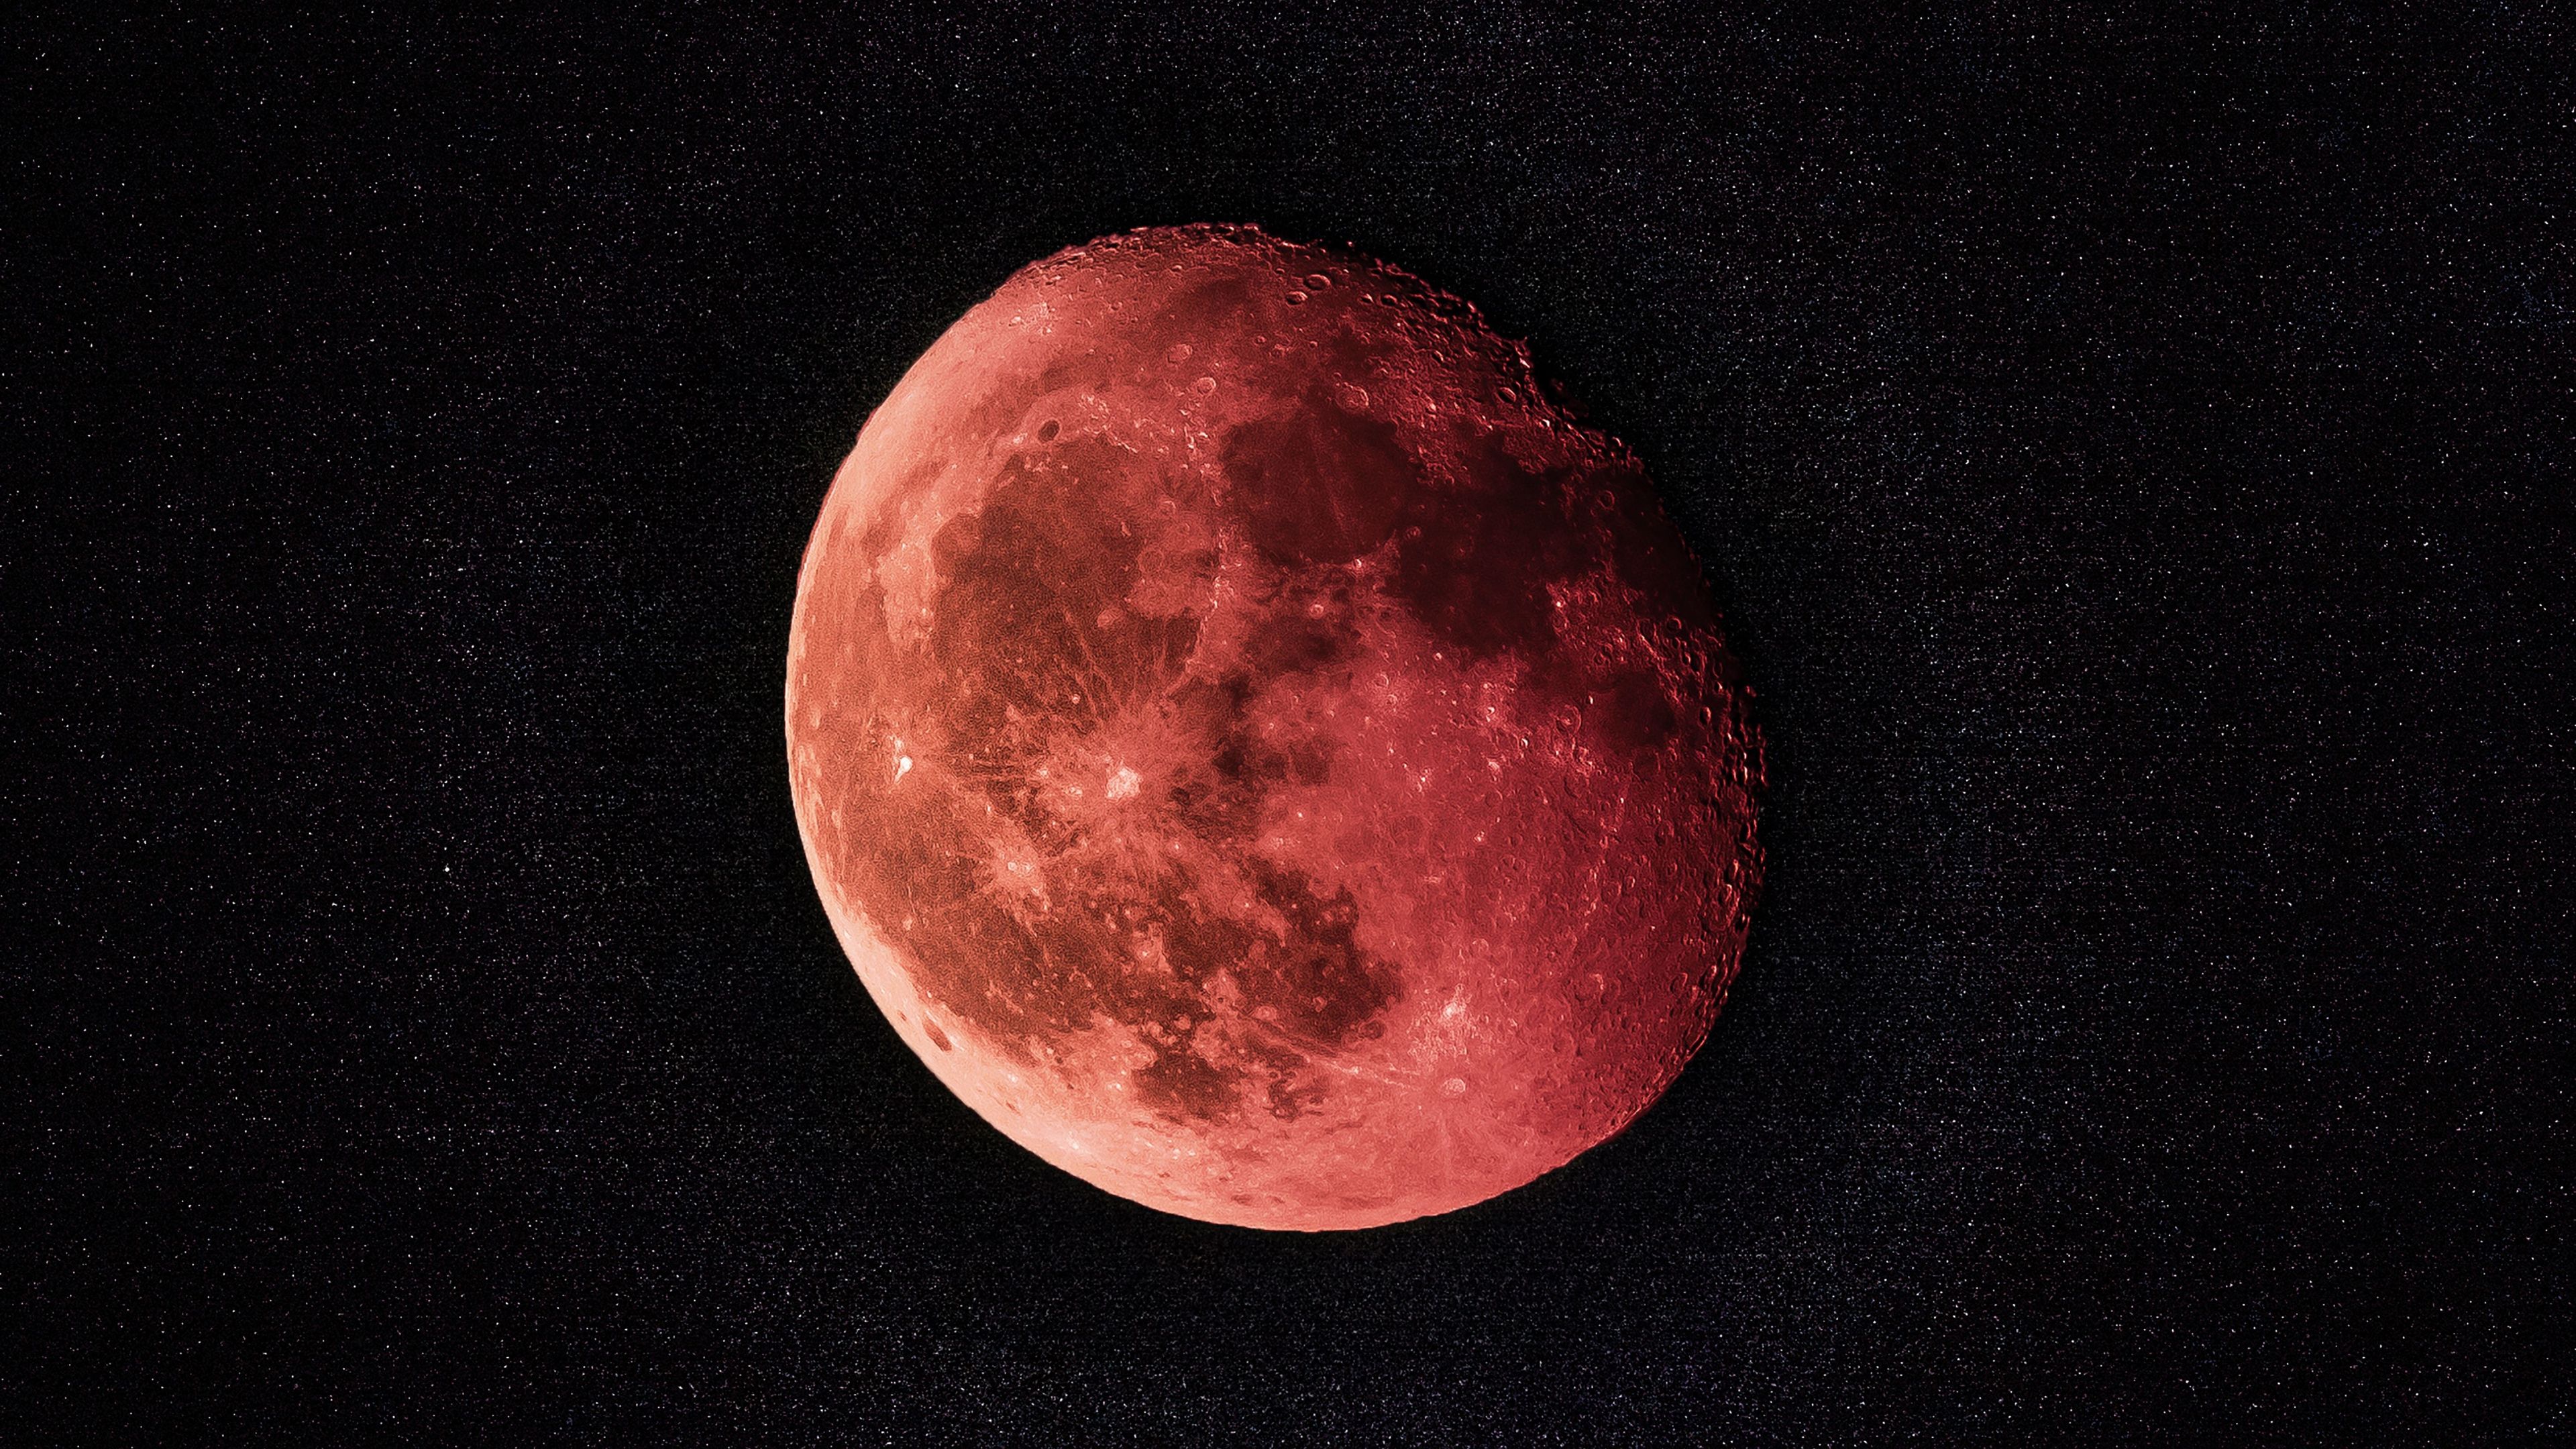 Download 3840x2160 wallpaper lunar eclipse, blood moon, nature, 4k, uhd 16: widescreen, 3840x2160 HD image, background, 10879